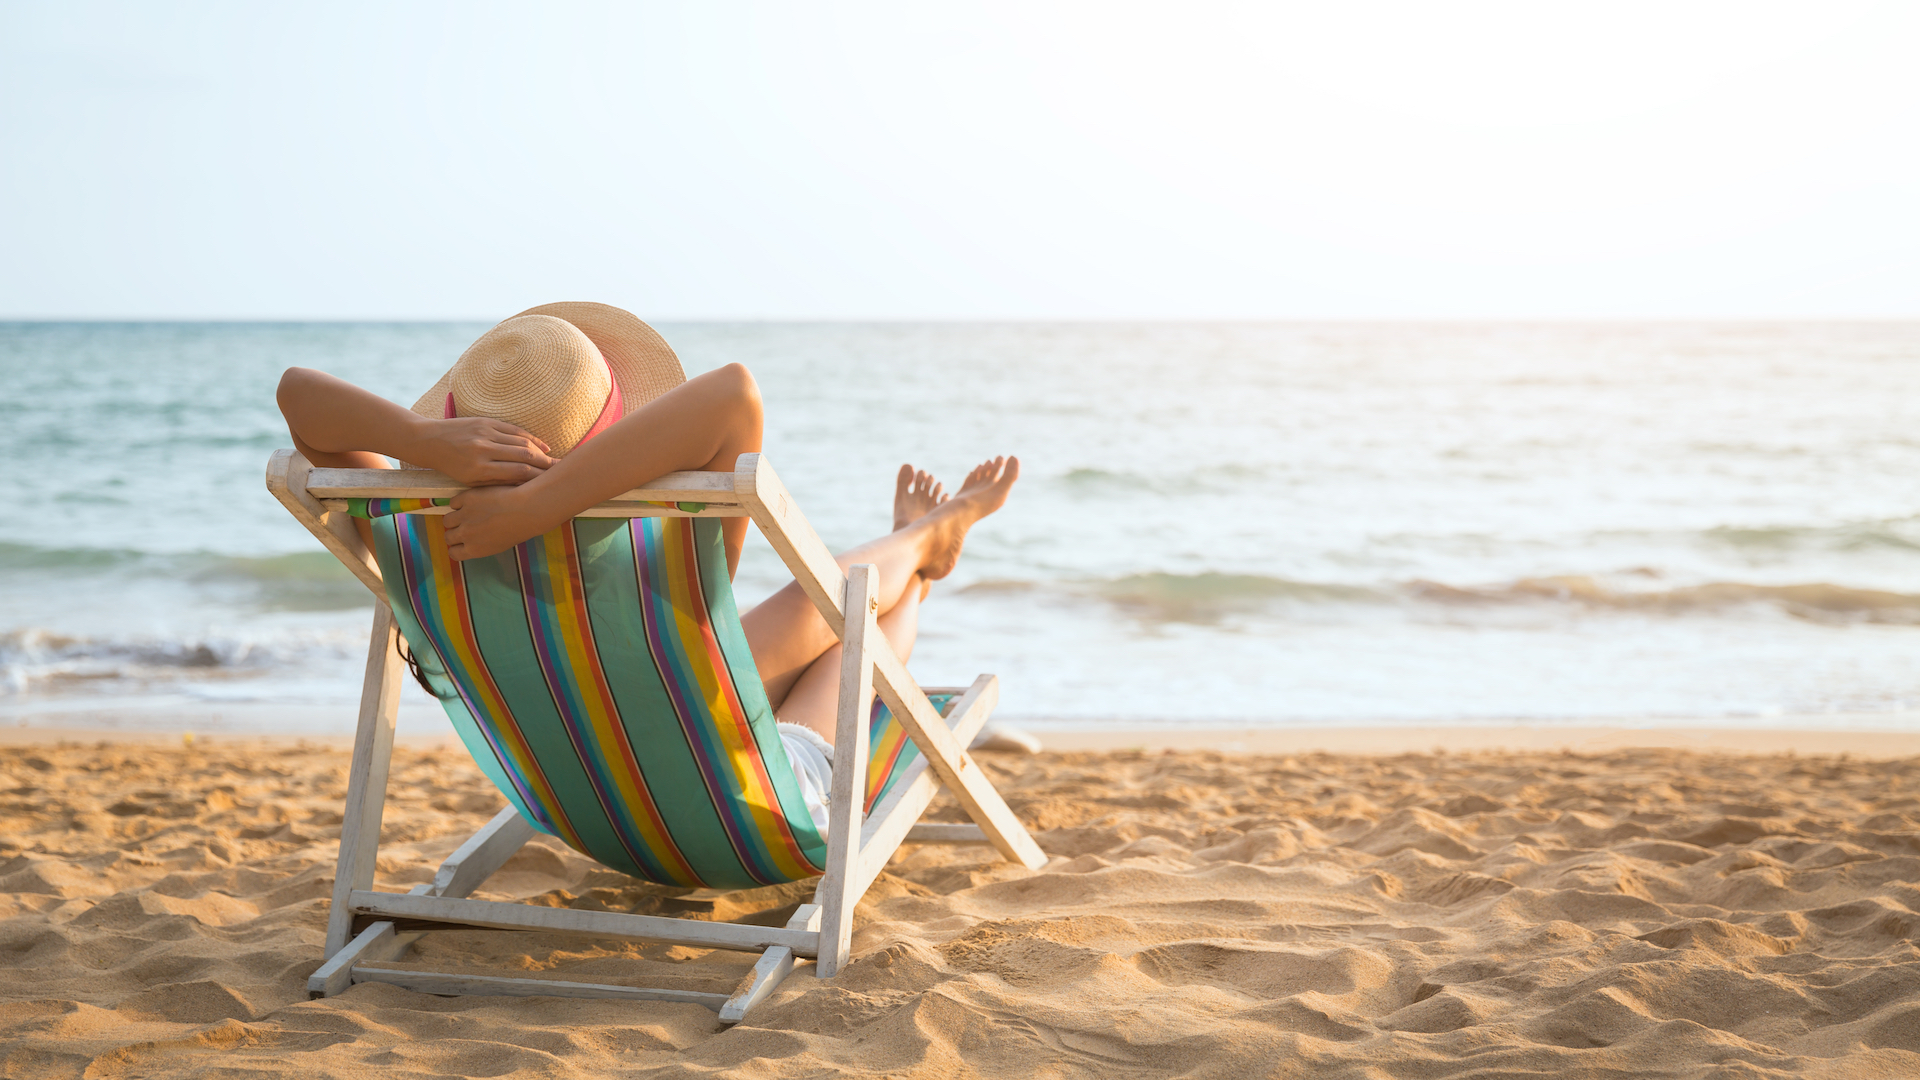 A person relaxing on a deckchair on a sandy beach